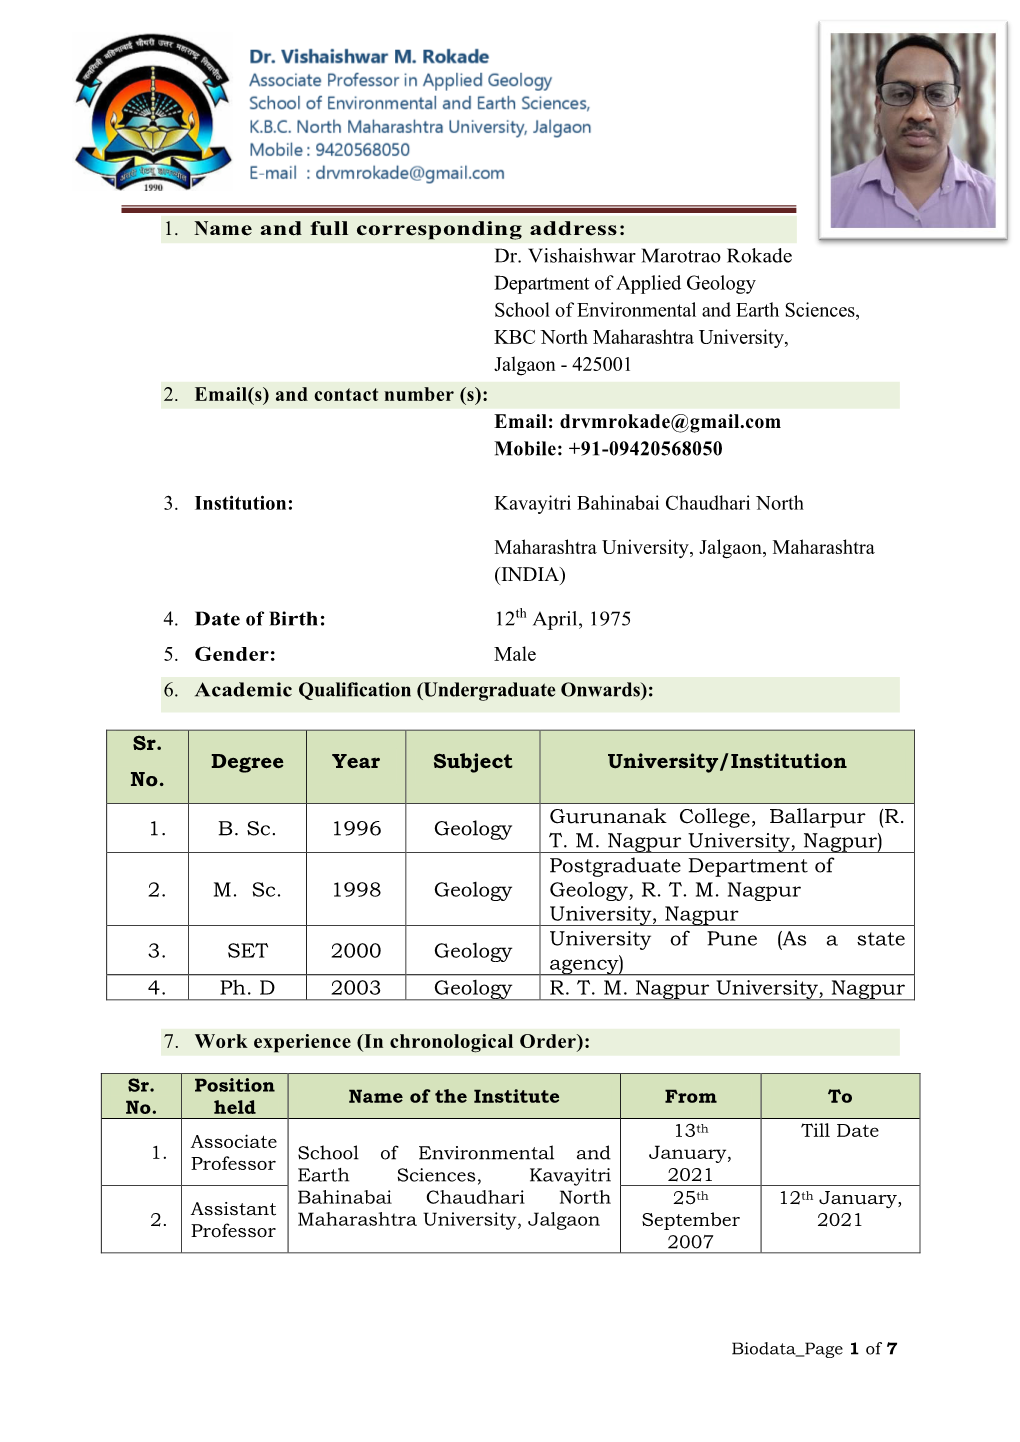 Dr. Vishaishwar Marotrao Rokade Department of Applied Geology School of Environmental and Earth Sciences, KBC North Maharashtra University, Jalgaon - 425001 2